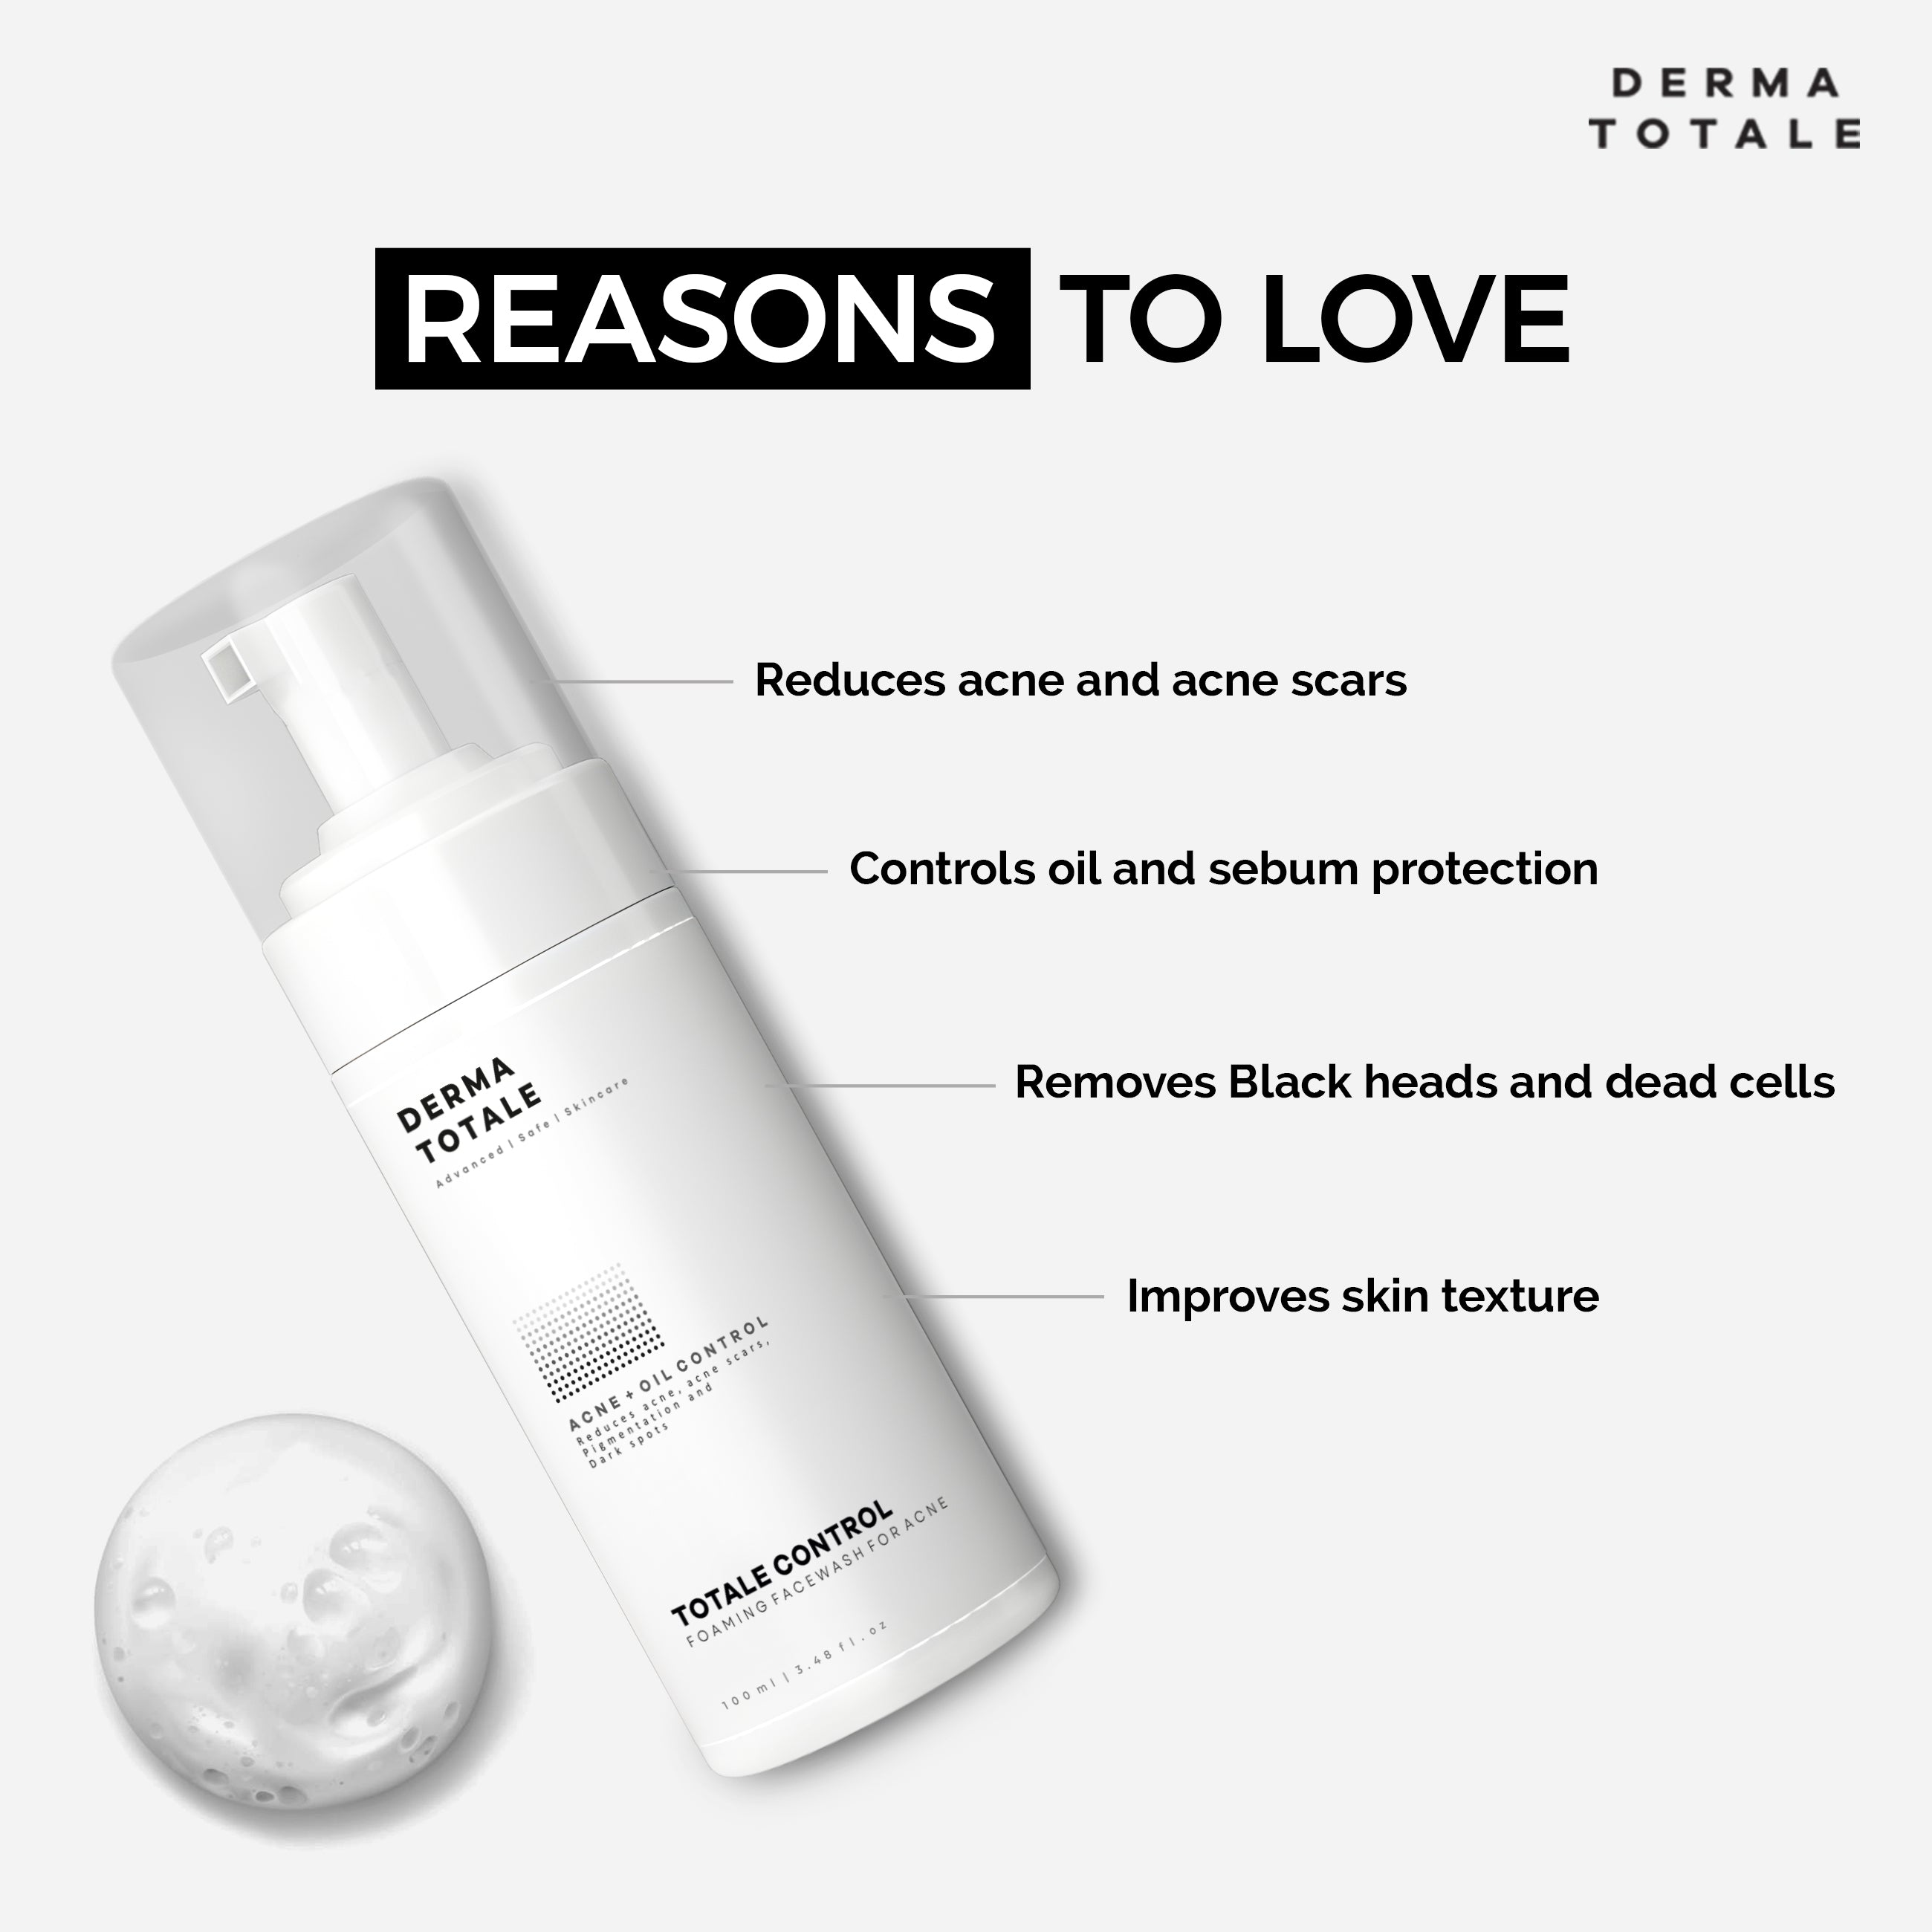 Totale Control Foaming Facewash - 100ml reasons to love